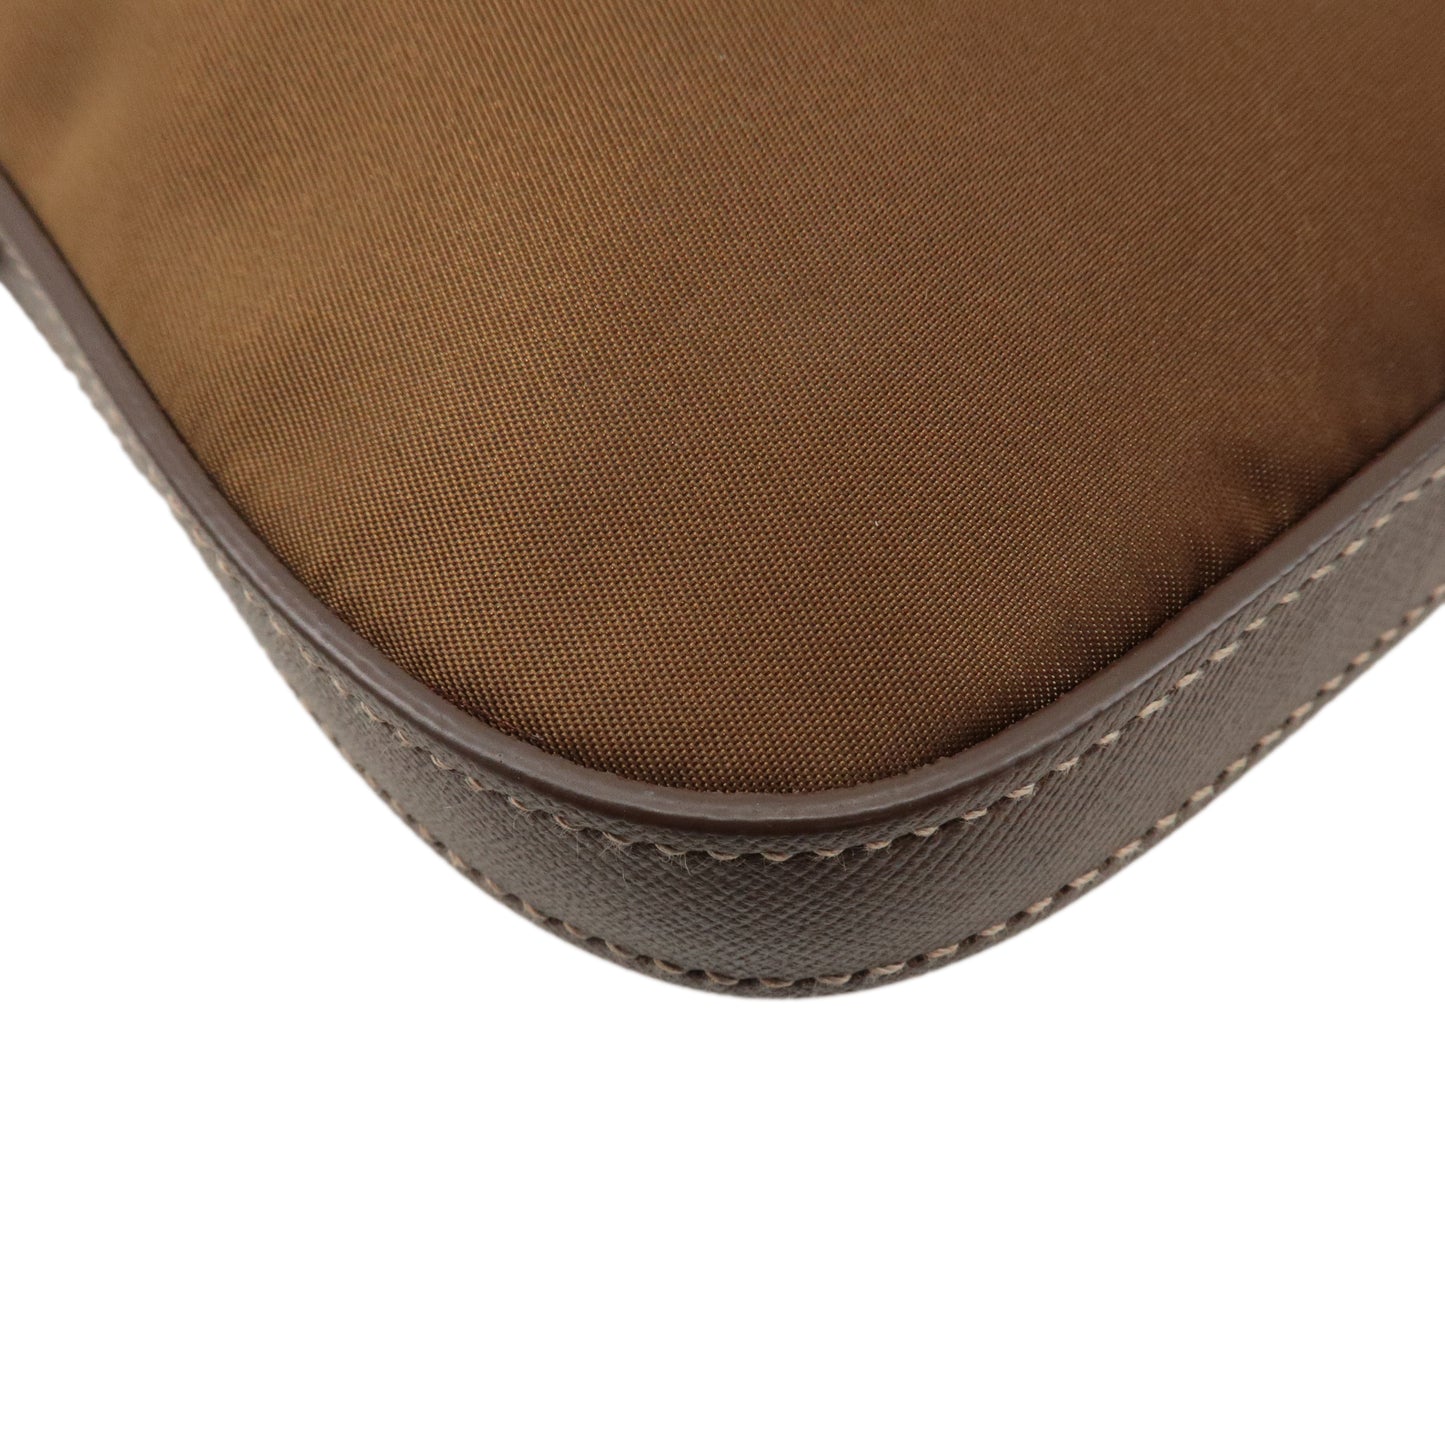 PRADA Logo Nylon Leather Shoulder Bag Crossbody Bag Brown BT0706